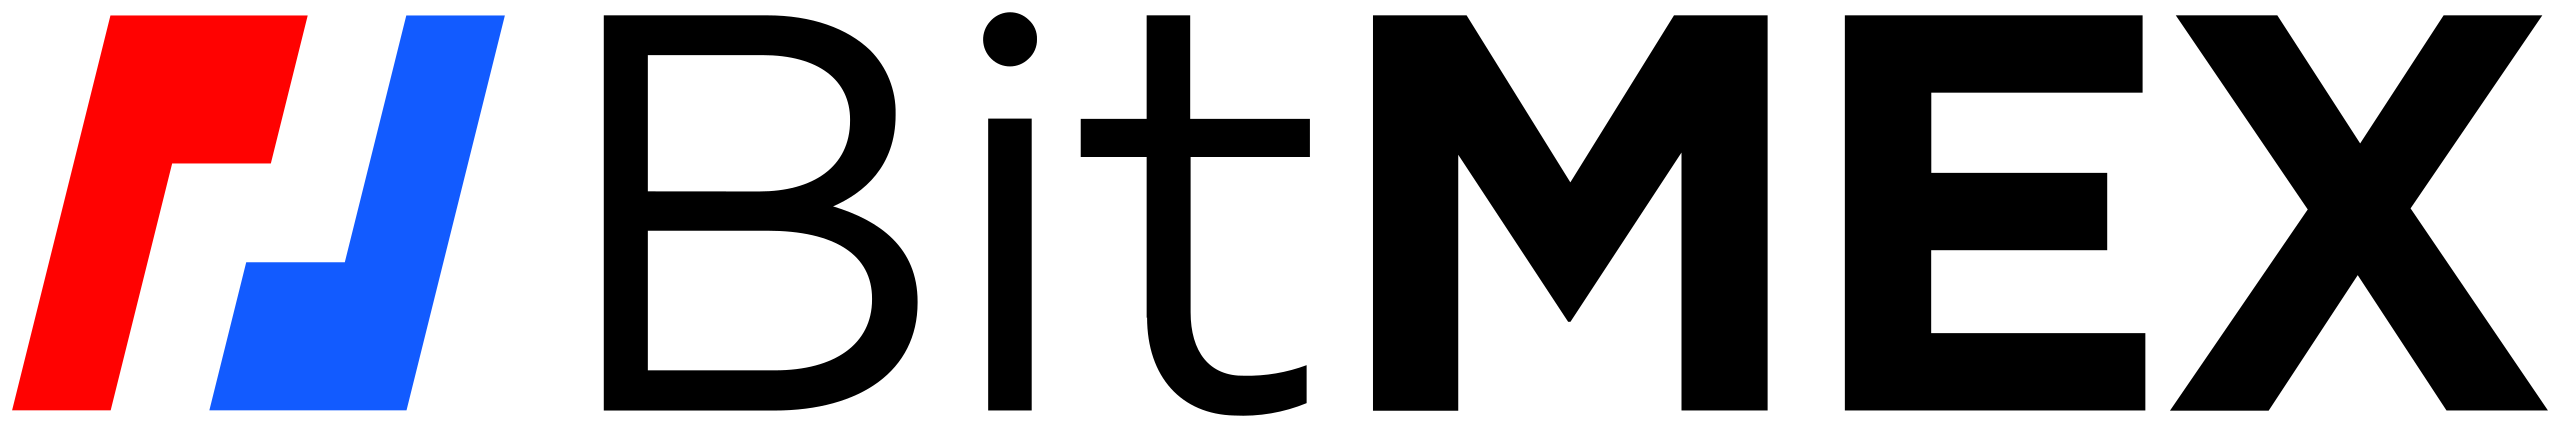 BitMEX logo 